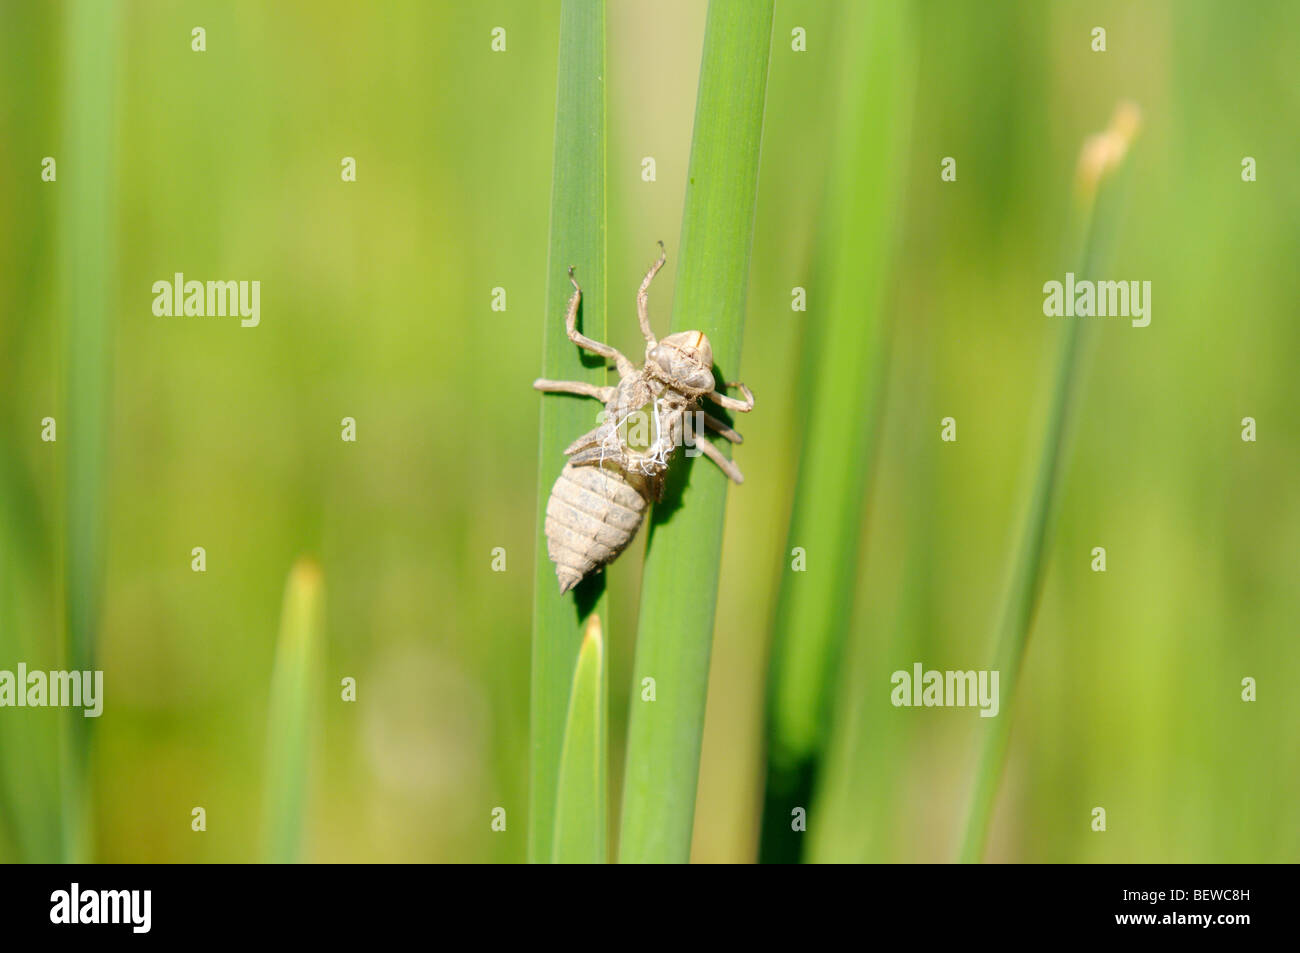 Dragonfly seduto su una lama di erba, close-up Foto Stock